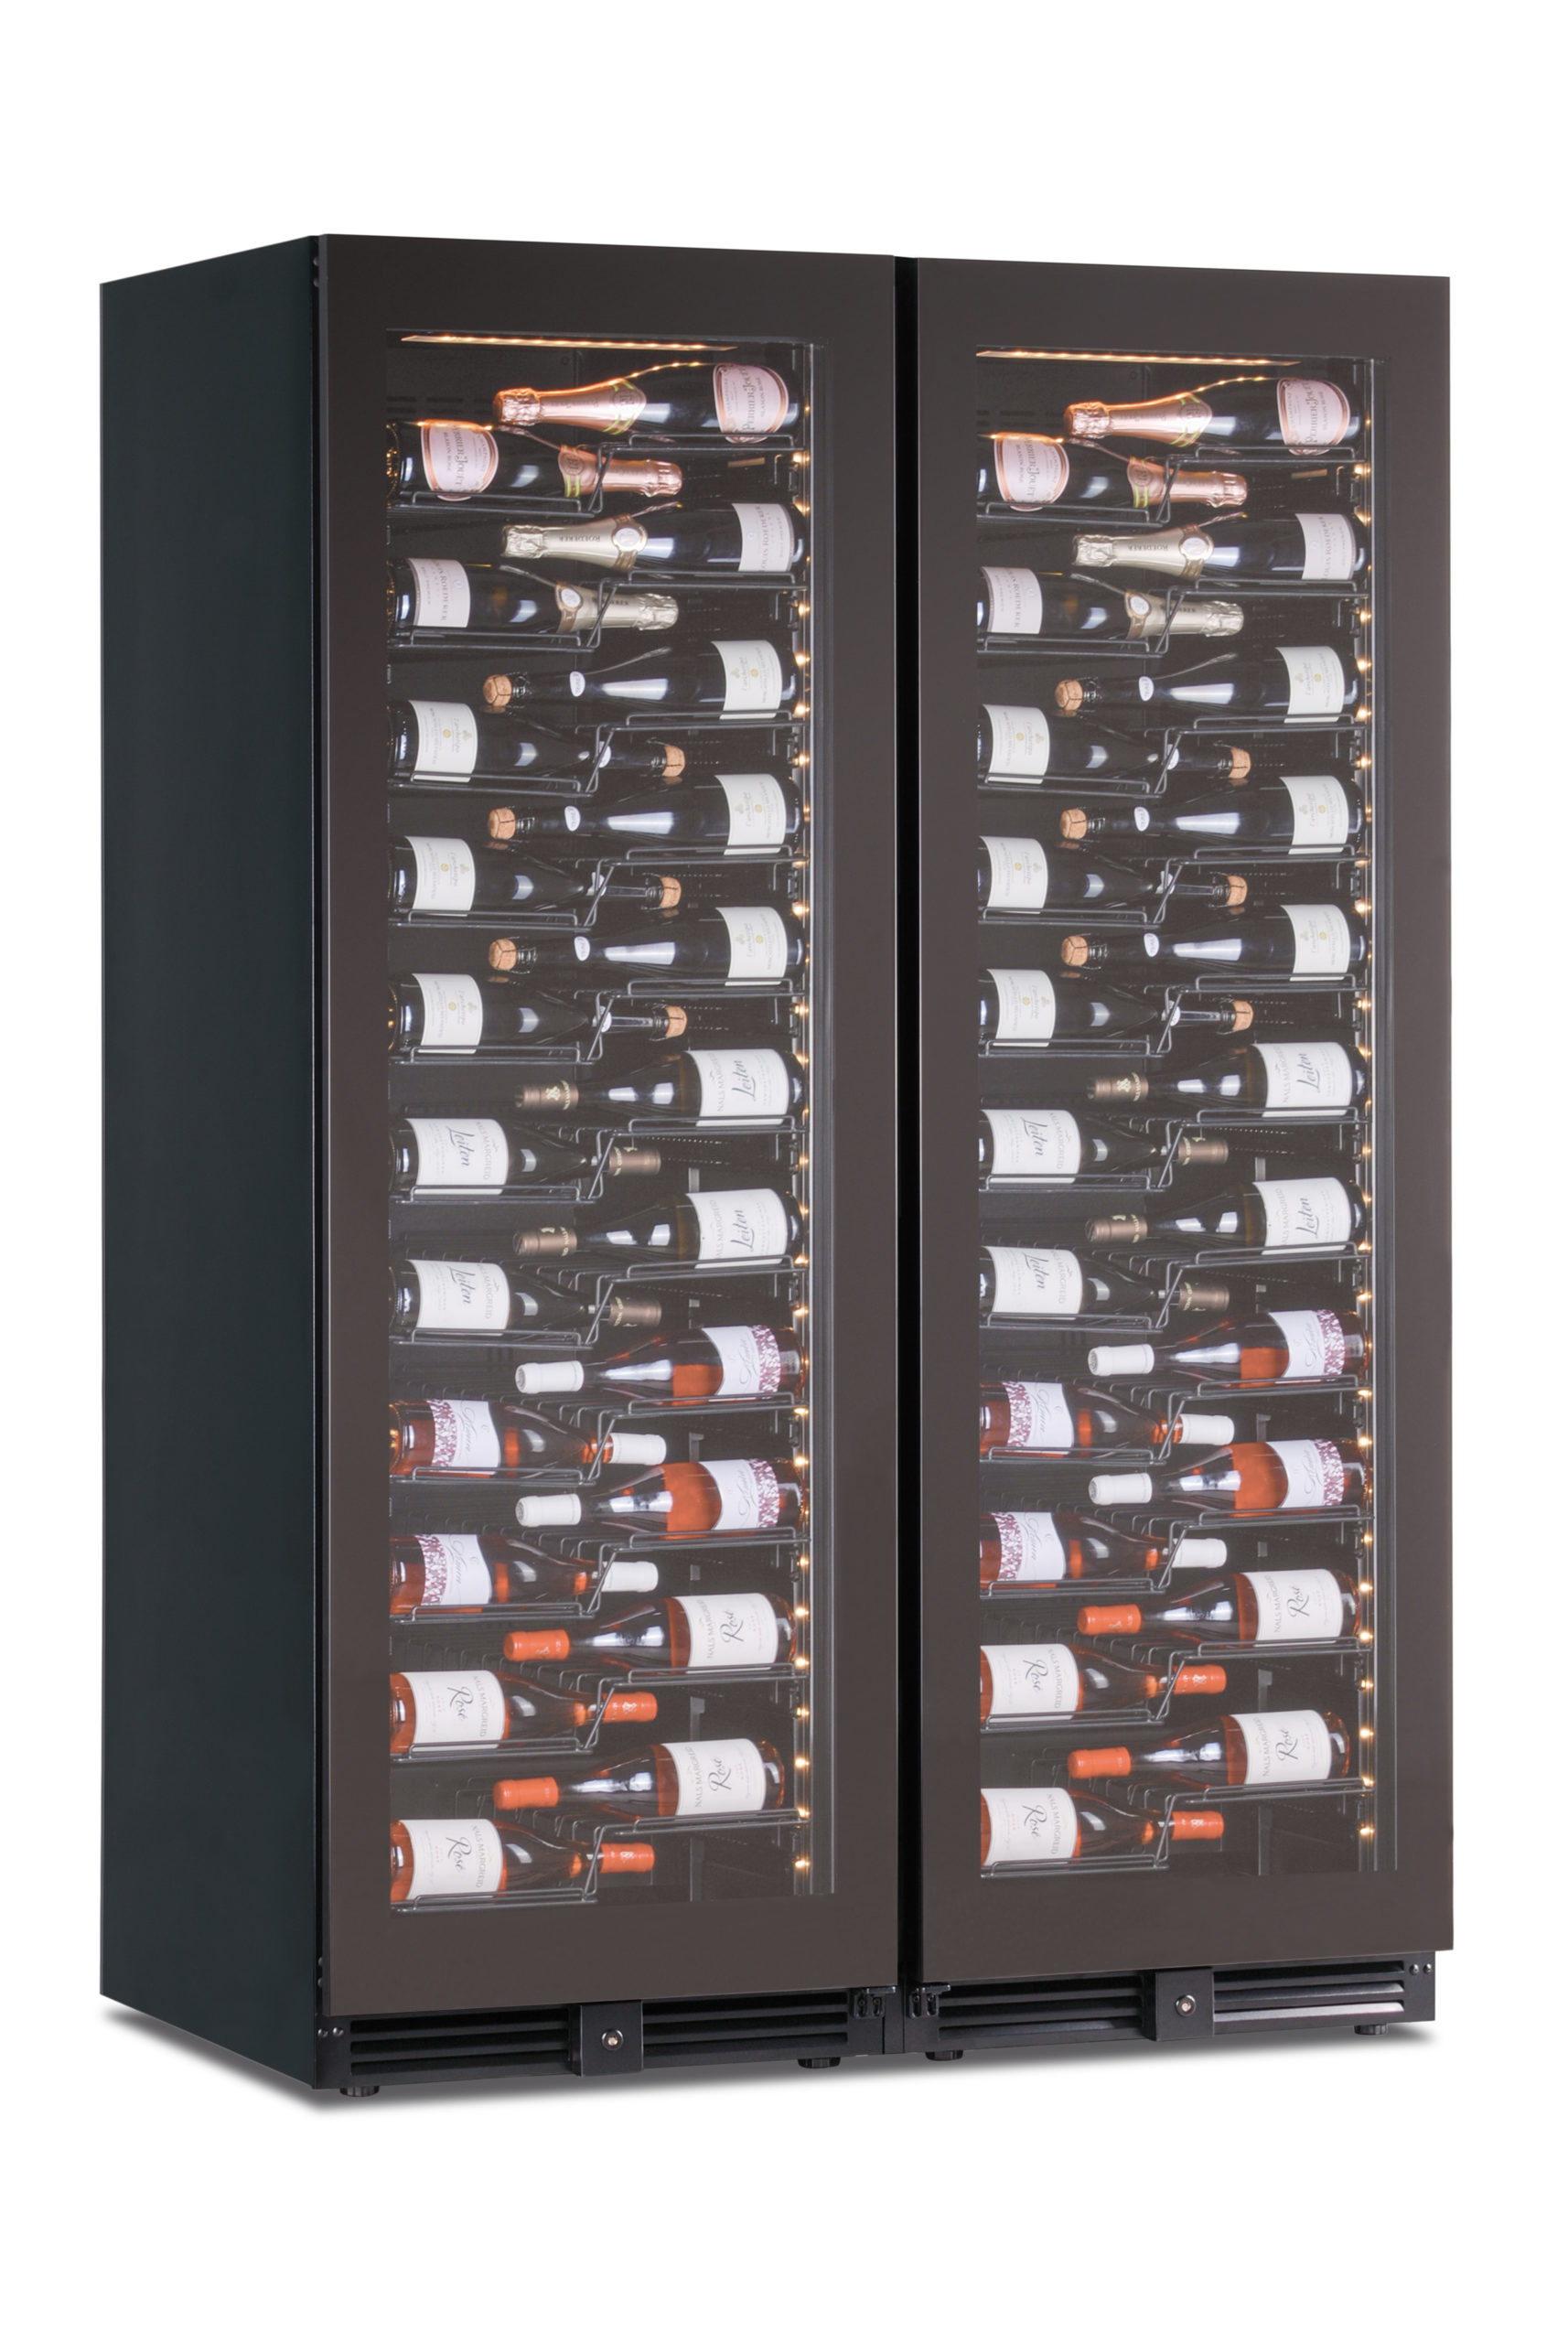 Cantinetta vino professionale - Klimaitalia CW355 G2TB